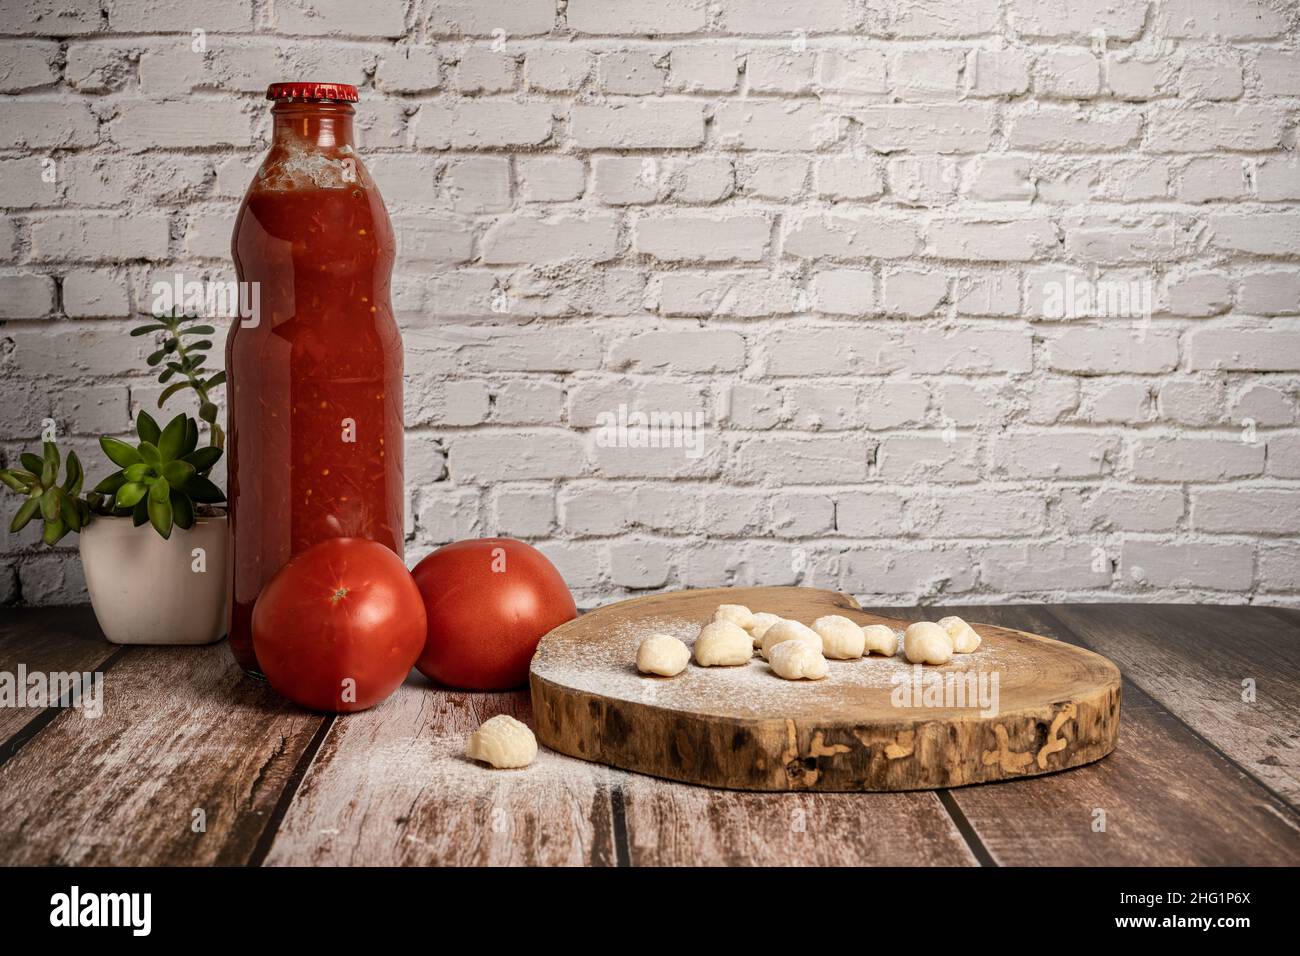 Preparation of homemade gnocchi with tomato sauce Stock Photo